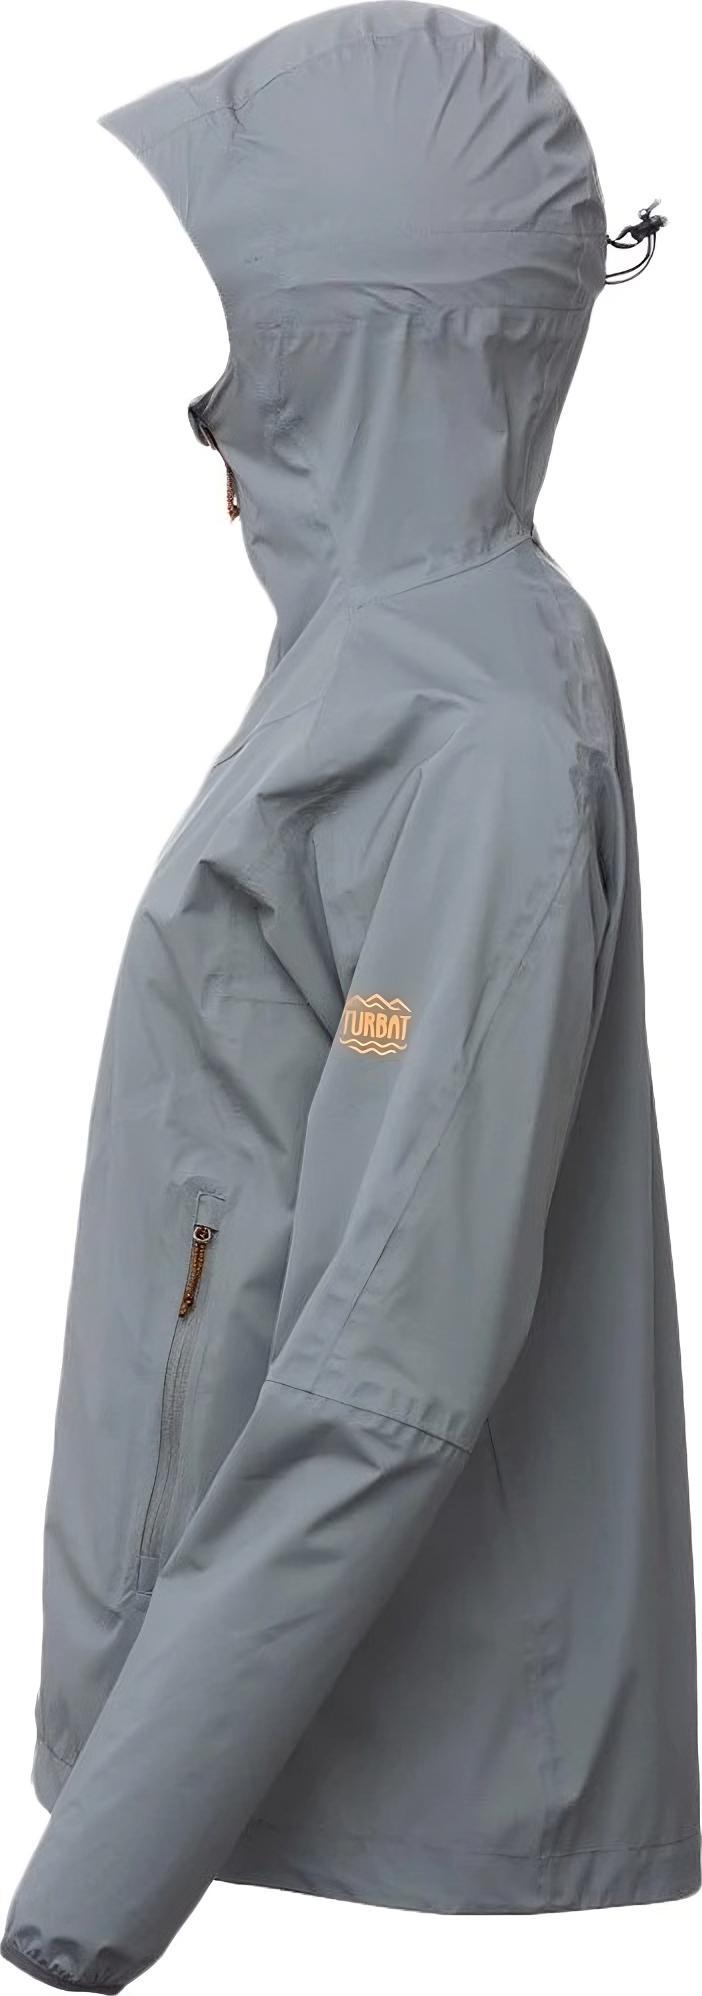 Куртка женская Turbat Reva Wmn steel gray XL серый фото 4